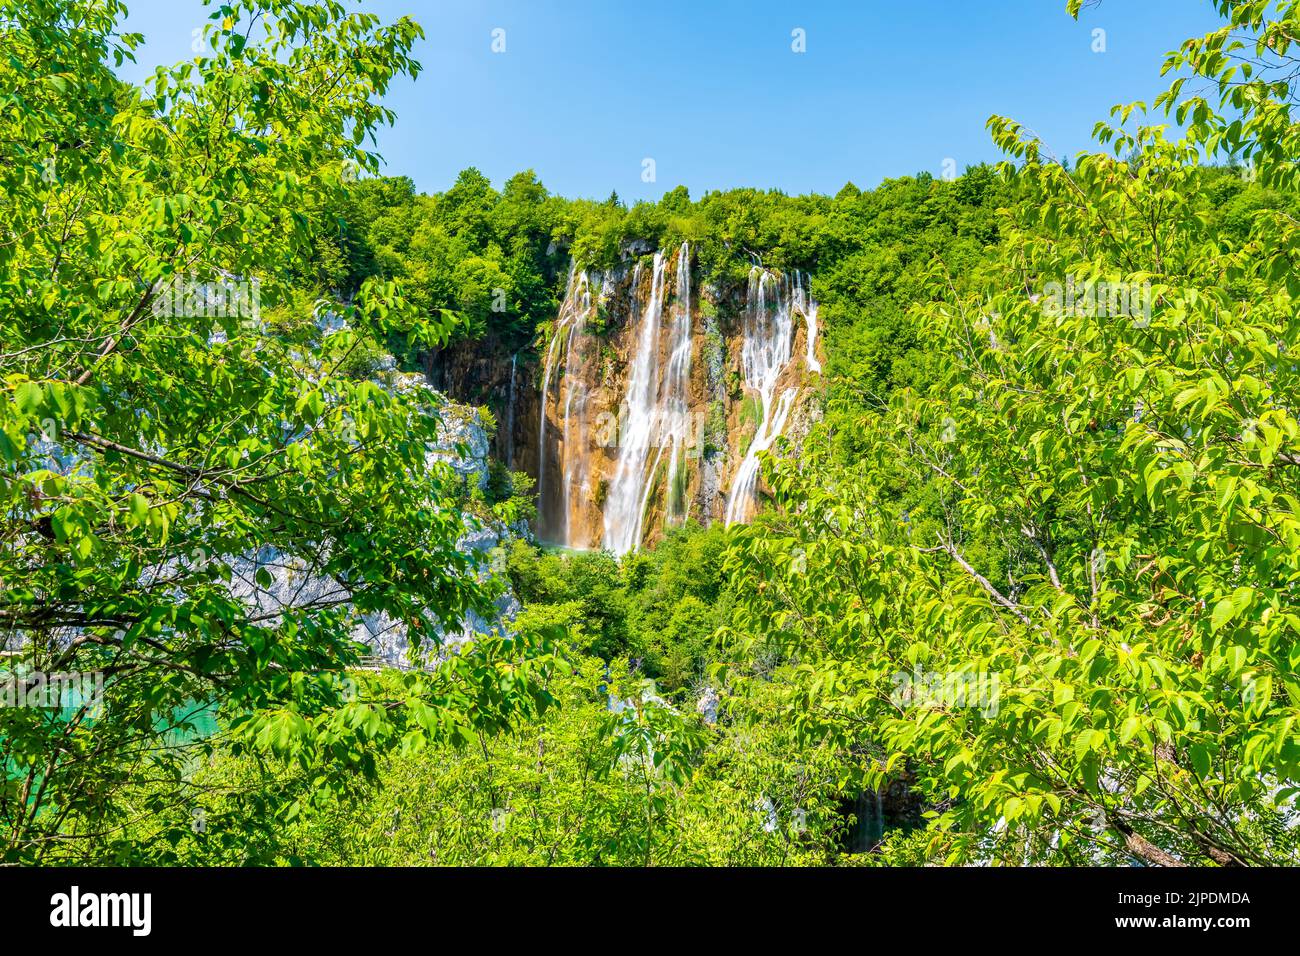 Der größte Wasserfall - Veliki Slap - im Nationalpark Plitvice, Kroatien. Stockfoto